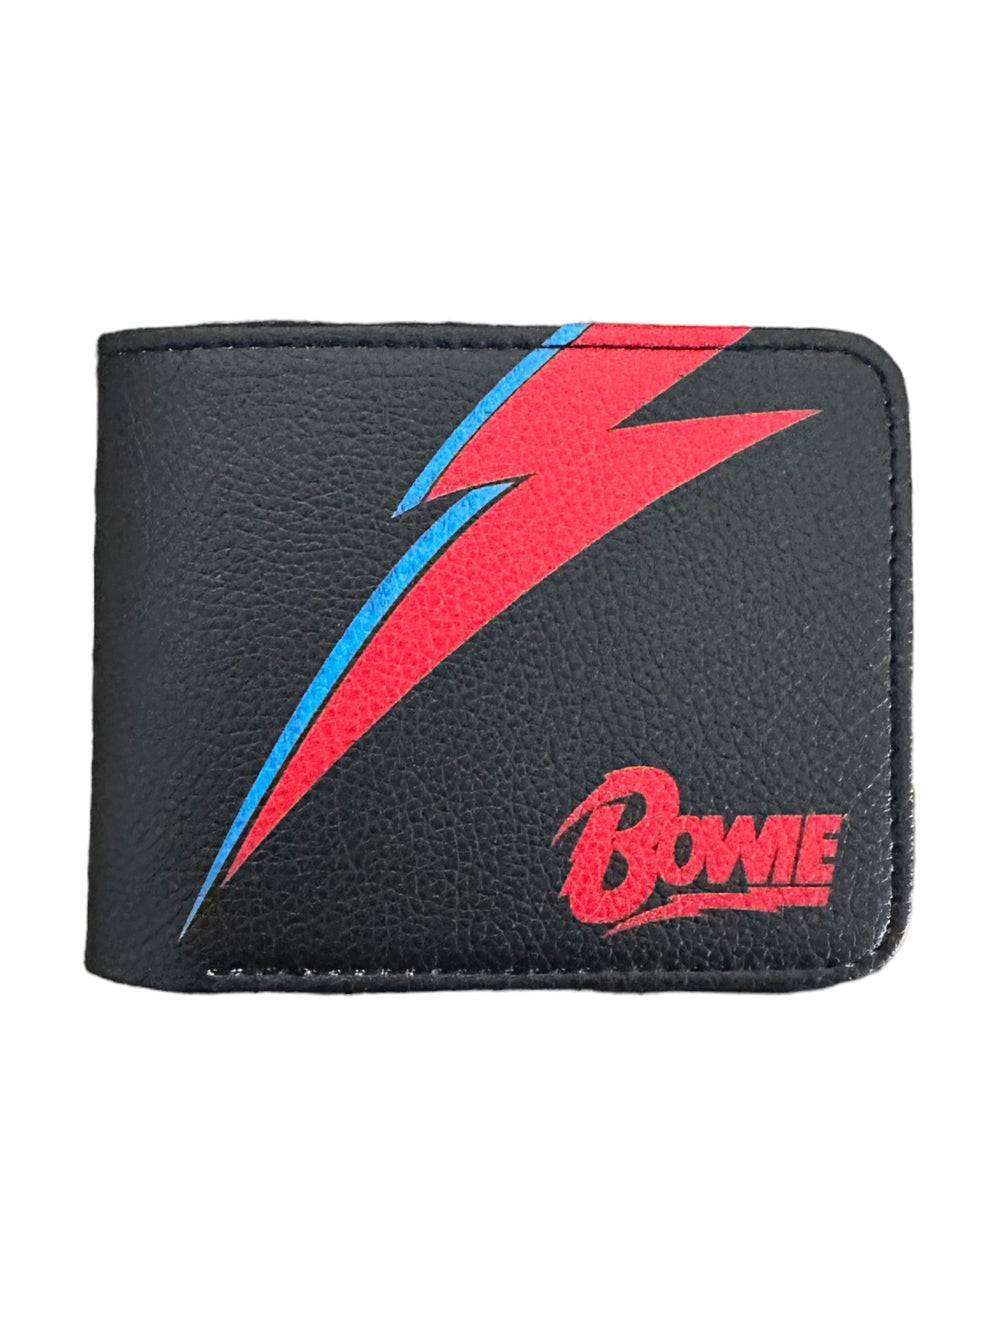 David Bowie Aladdin Sane Dogs Official Licensed Wallet Zip Pocket: NEW